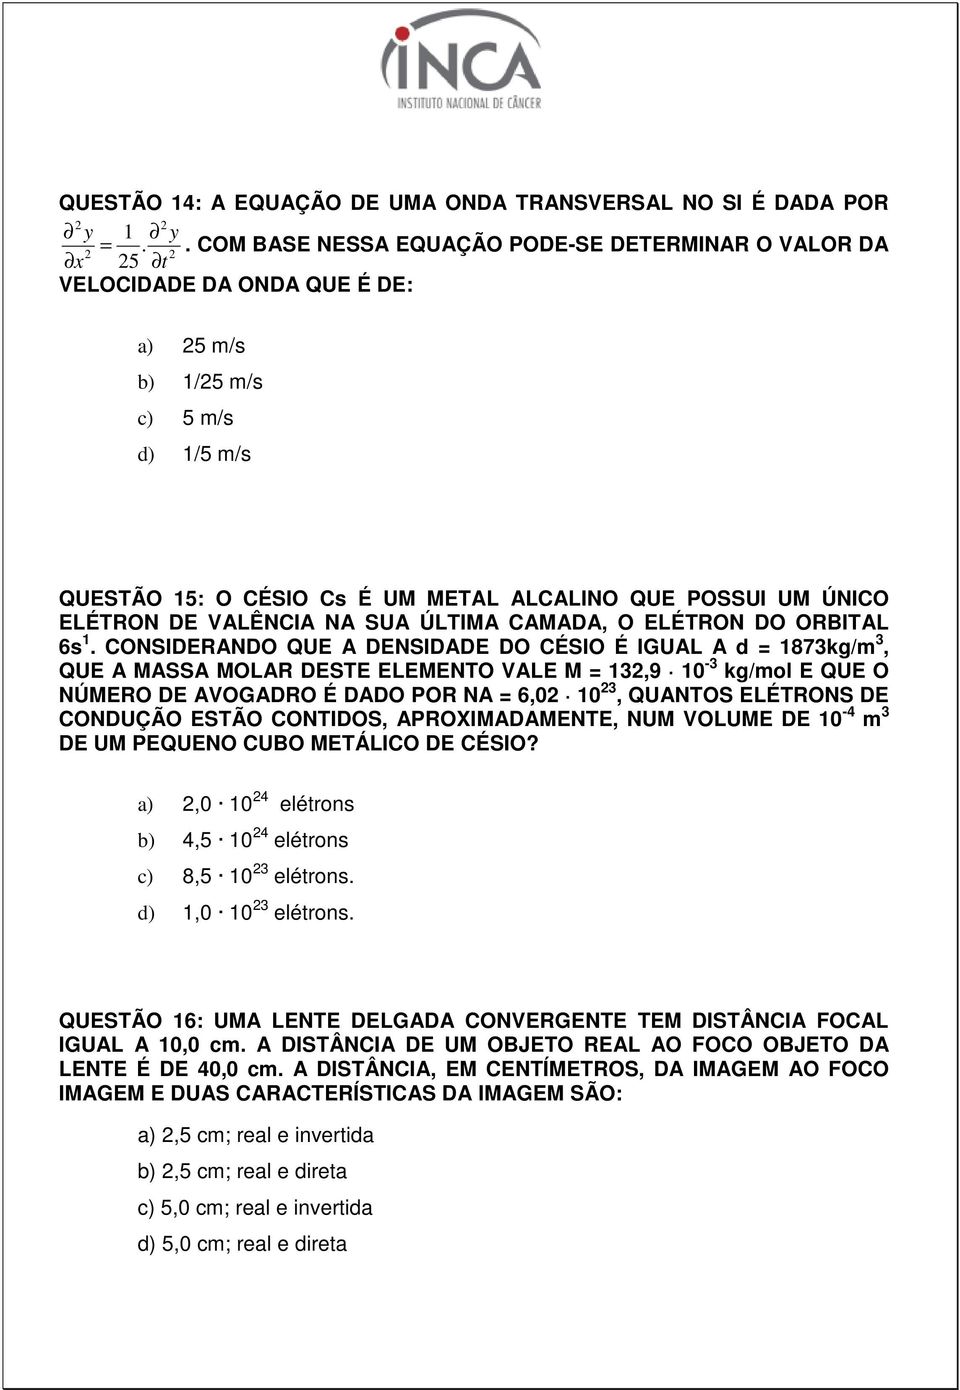 ELÉTRON DE VALÊNCIA NA SUA ÚLTIMA CAMADA, O ELÉTRON DO ORBITAL 6s 1.